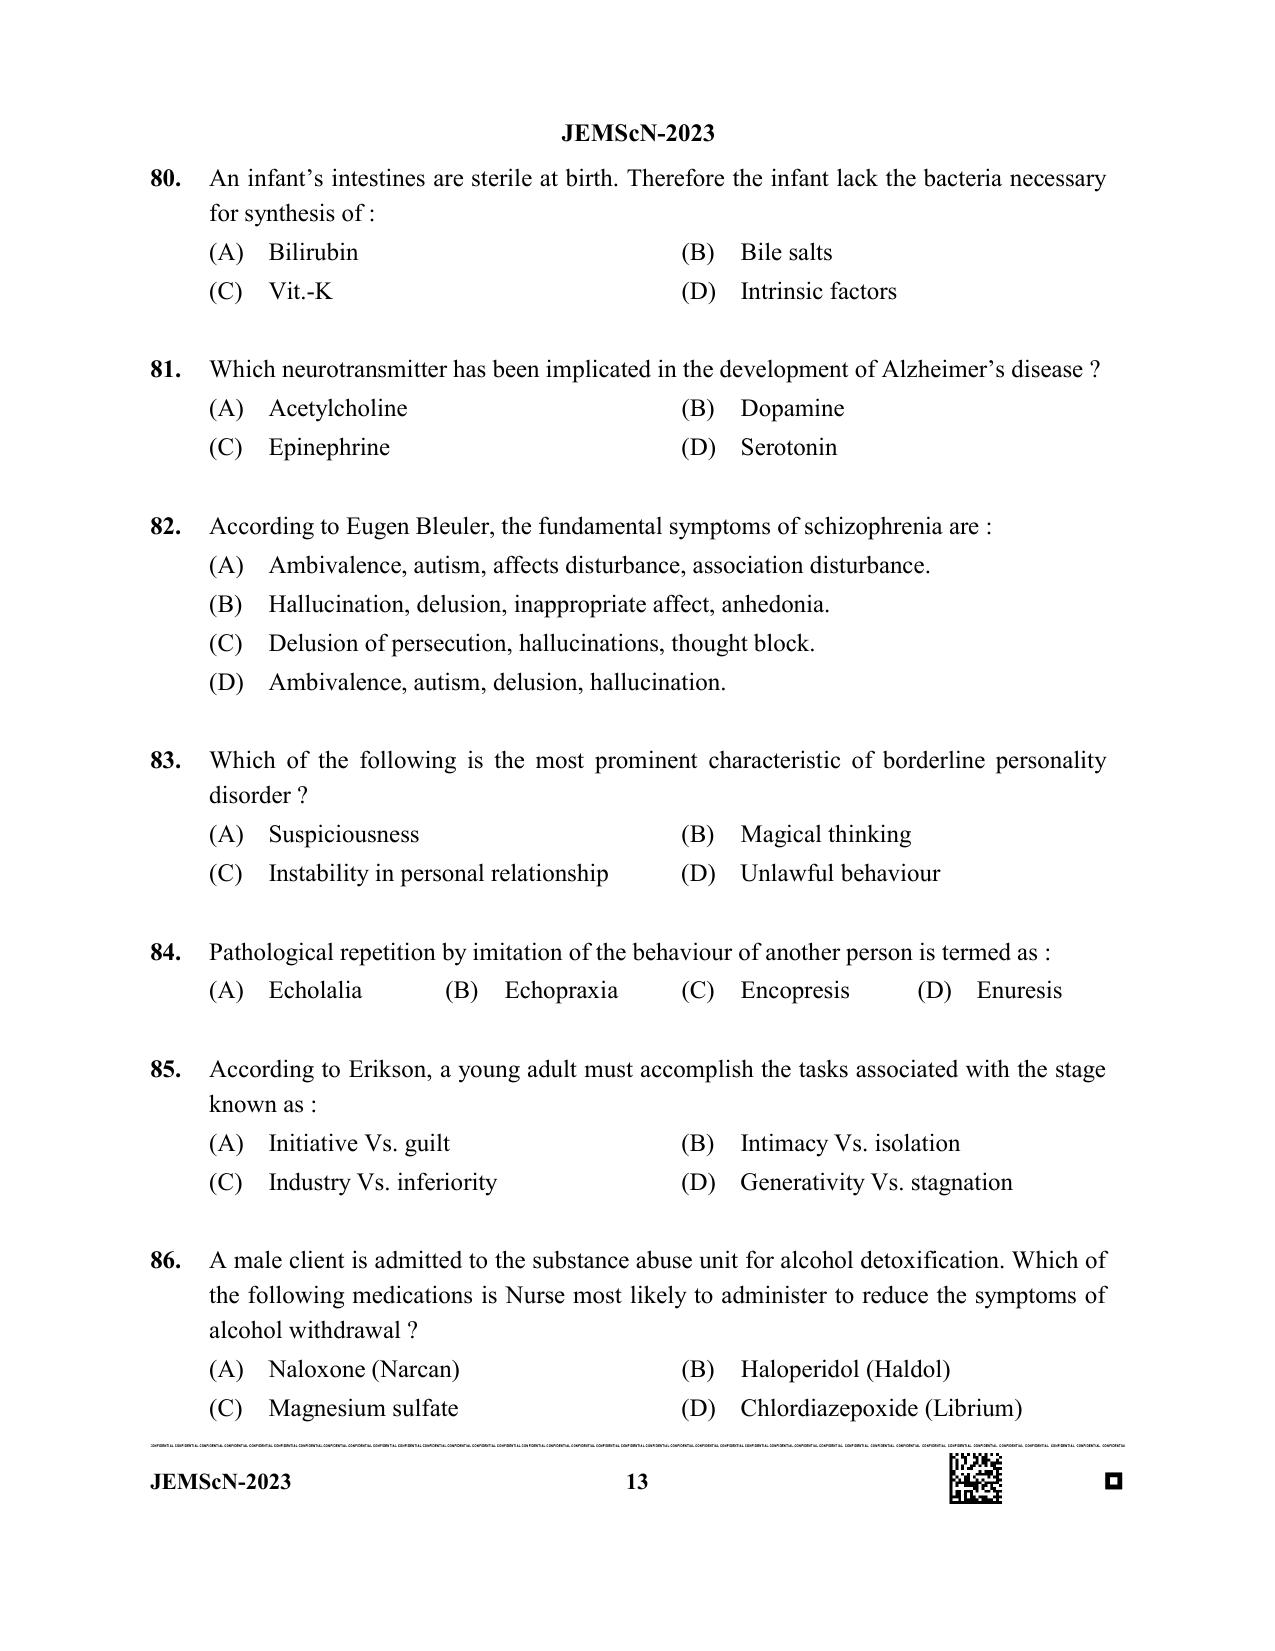 WB JEMScN 2023 Question Paper - Page 13